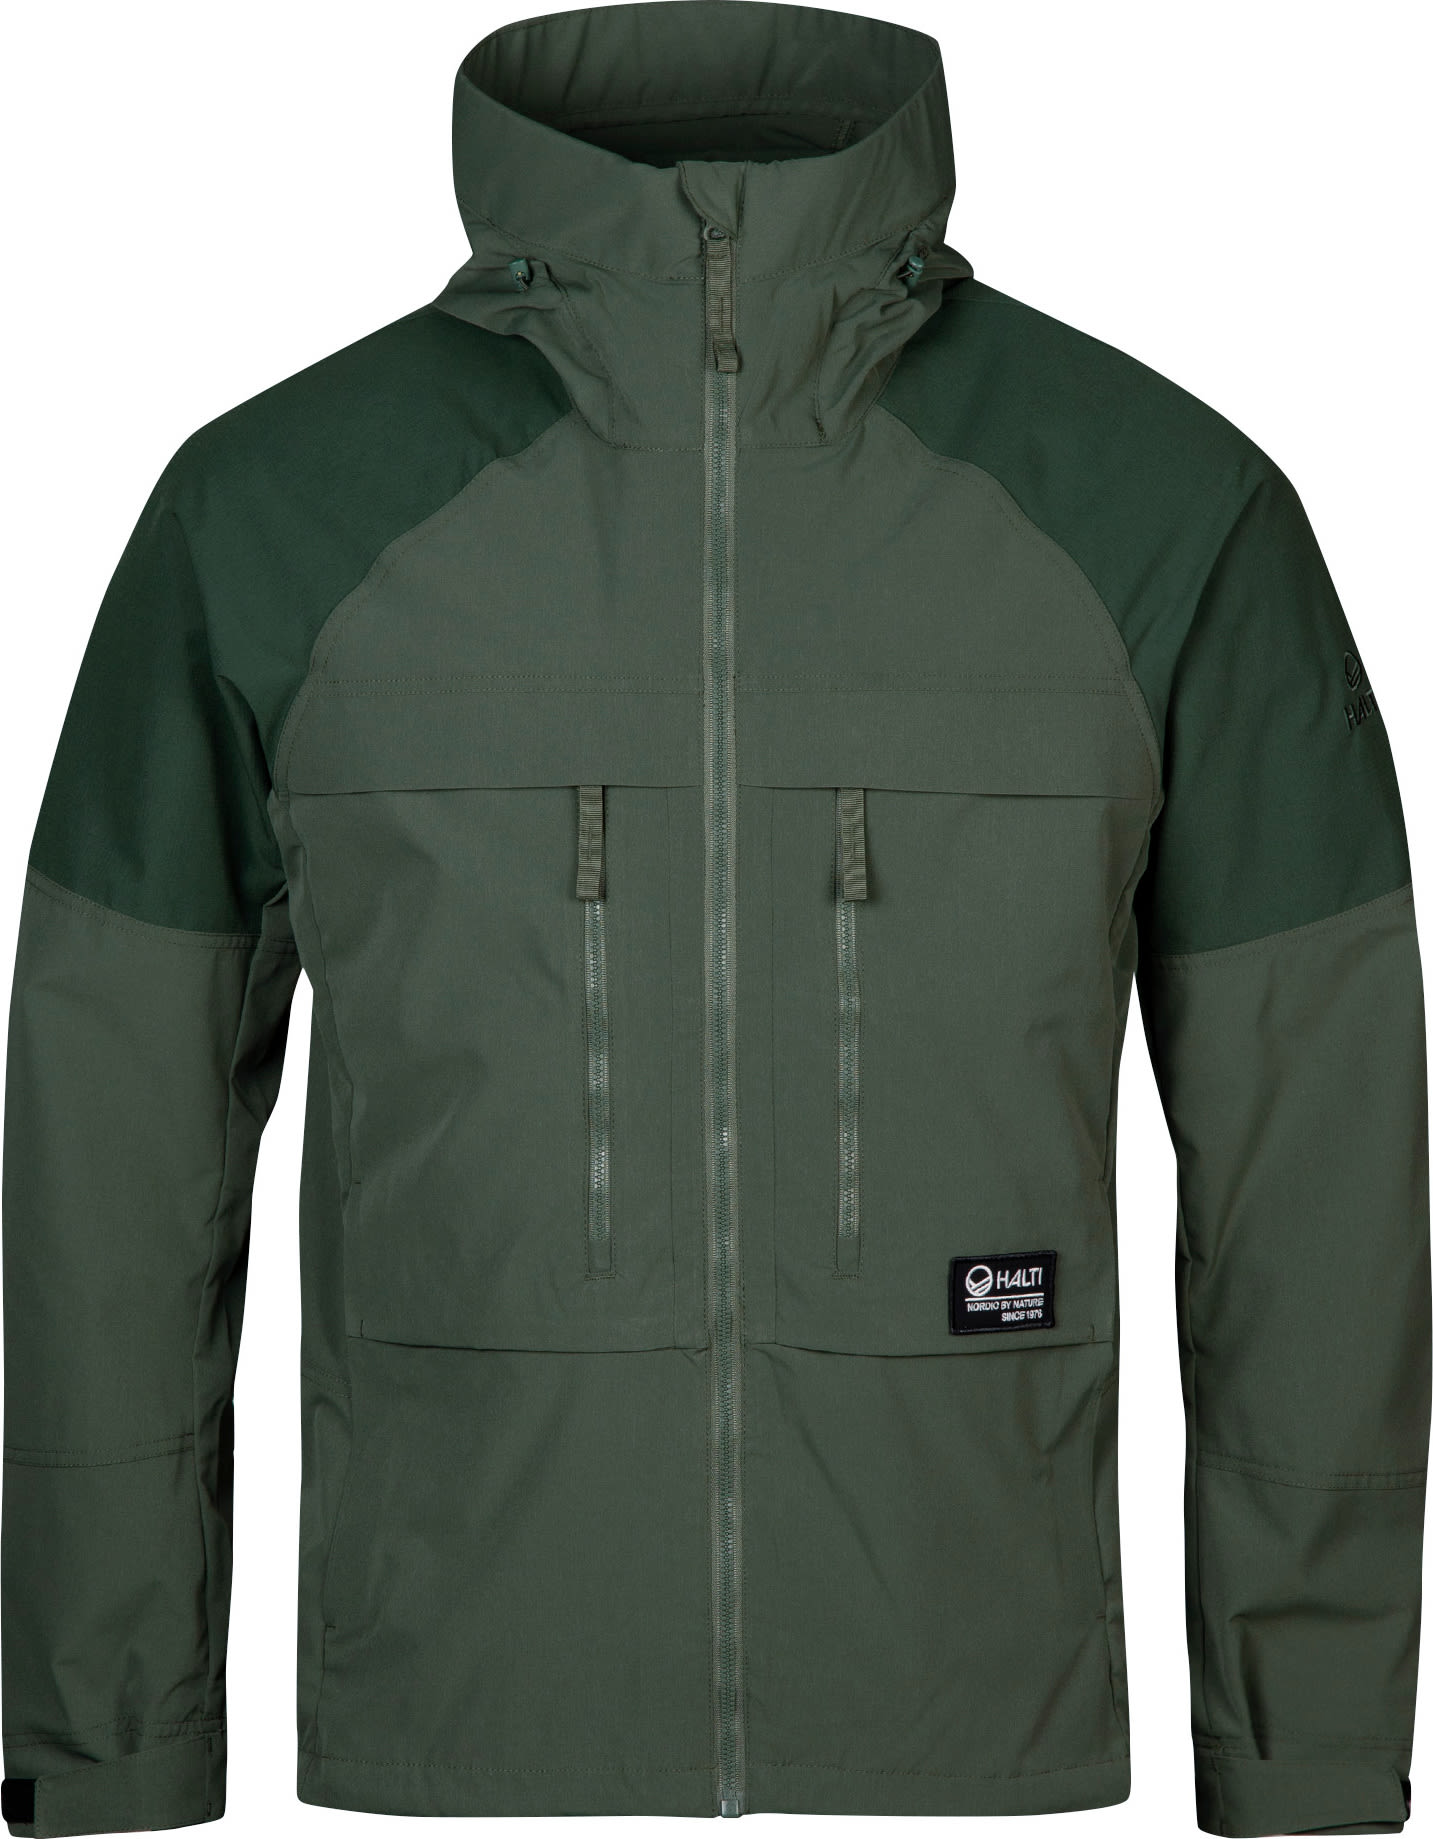 Buy Halti Men's Hiker Lite Jacket from Outnorth